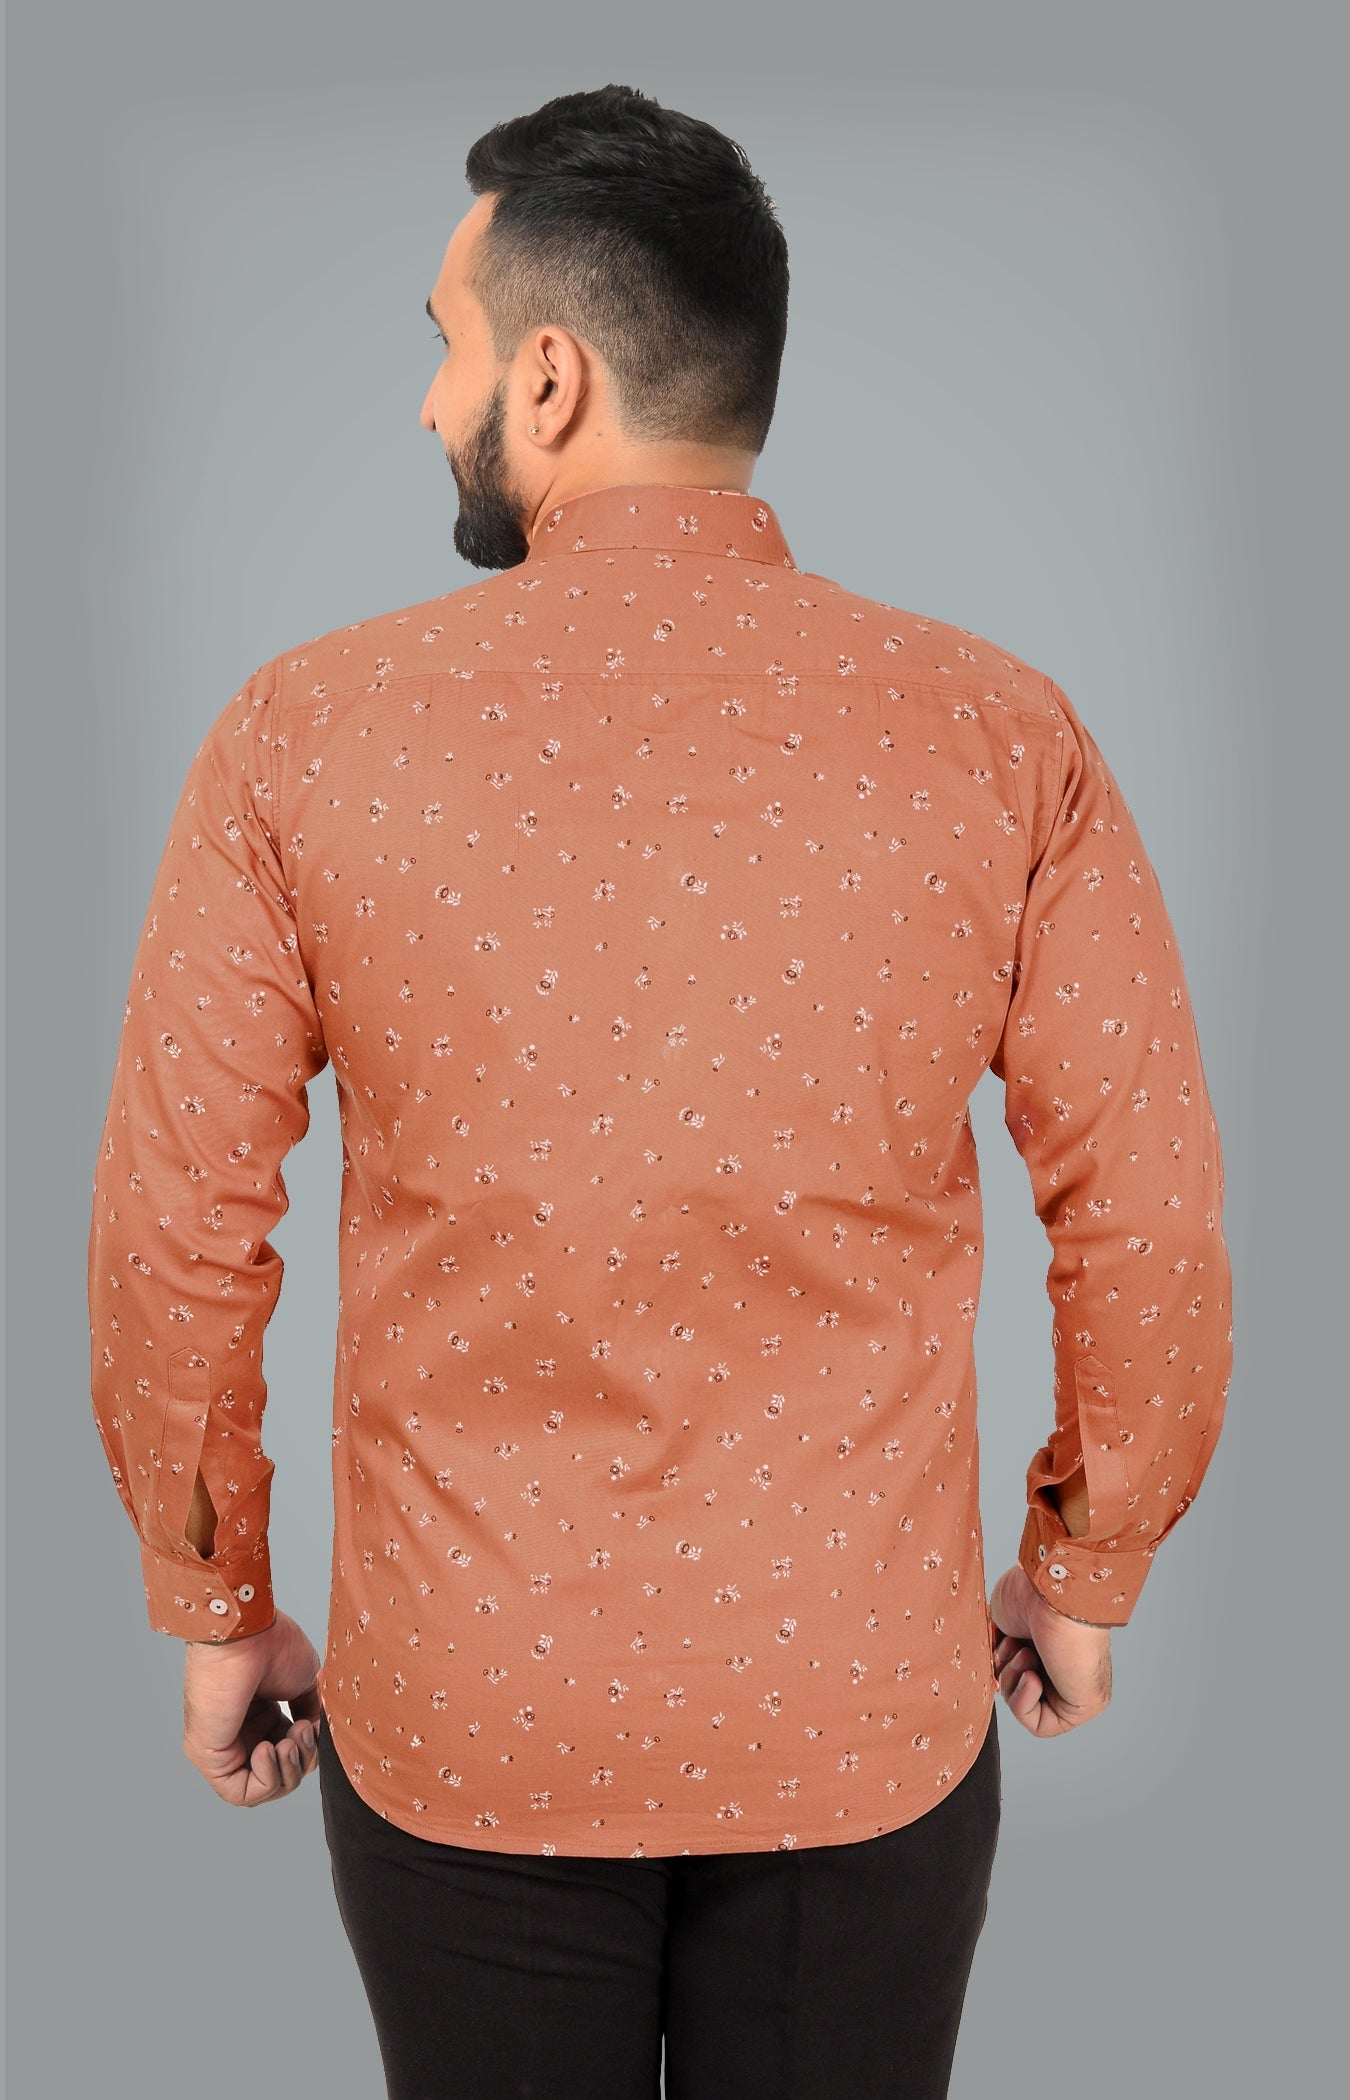 Premium Men's Slim Fit Cotton Floral Printed Shirt